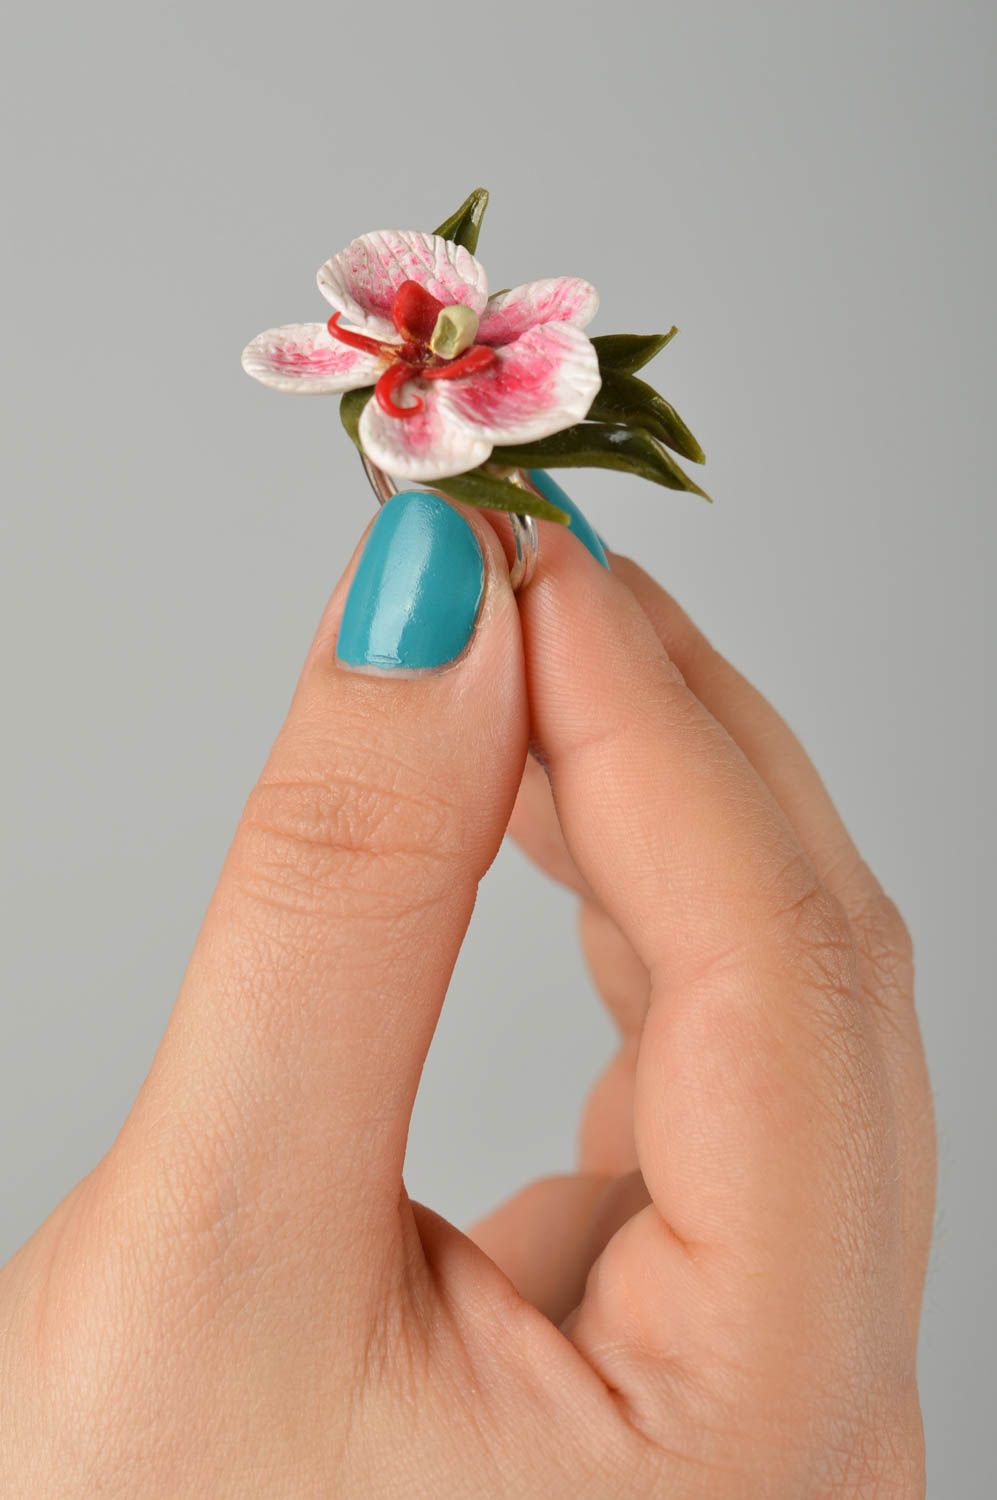 Stylish handmade flower ring polymer clay ideas fashion accessories for girls photo 2